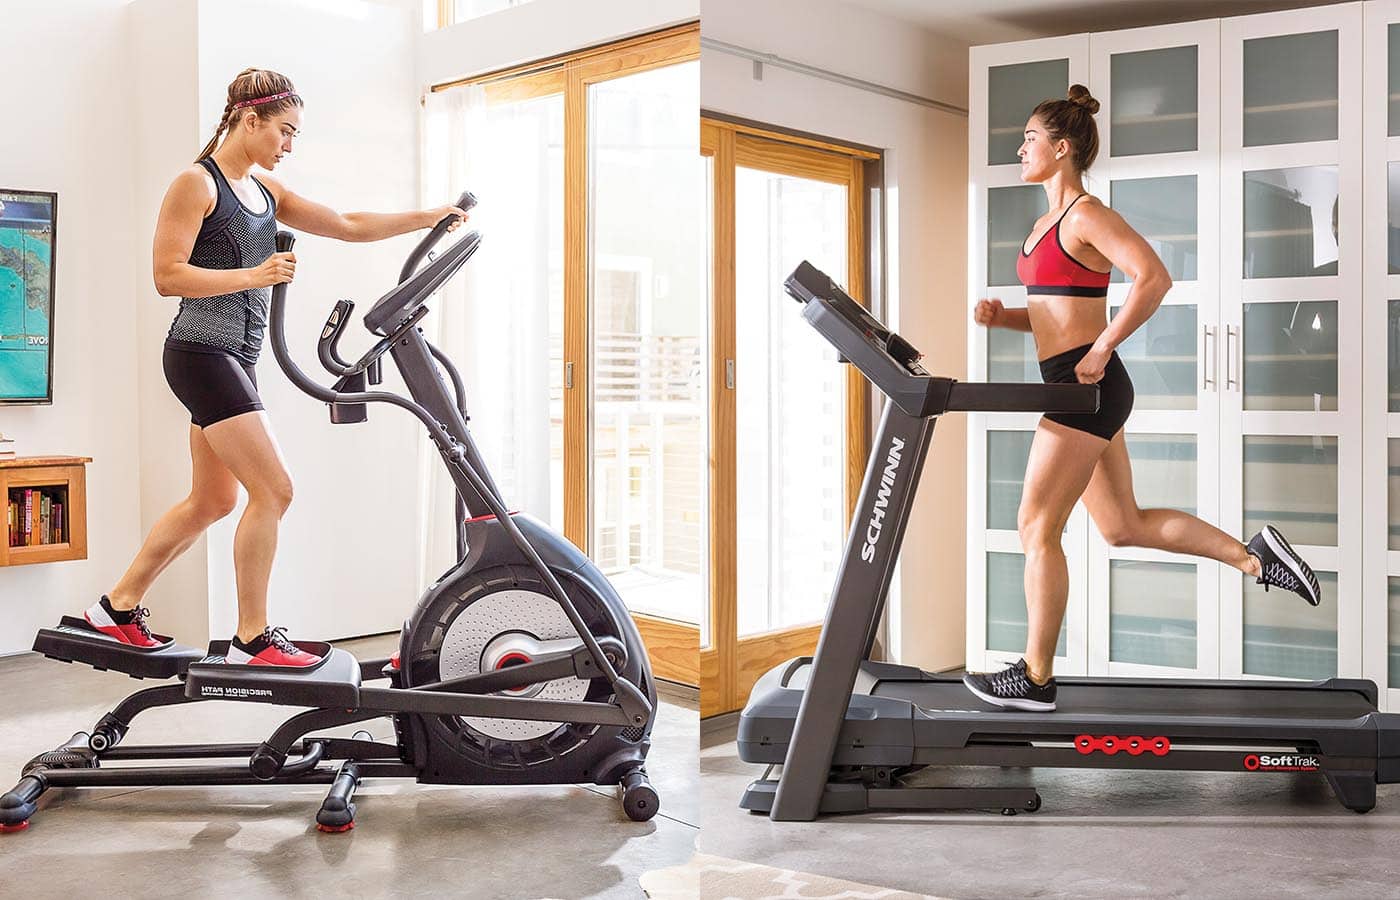 Elliptical vs Treadmill for Weight Loss